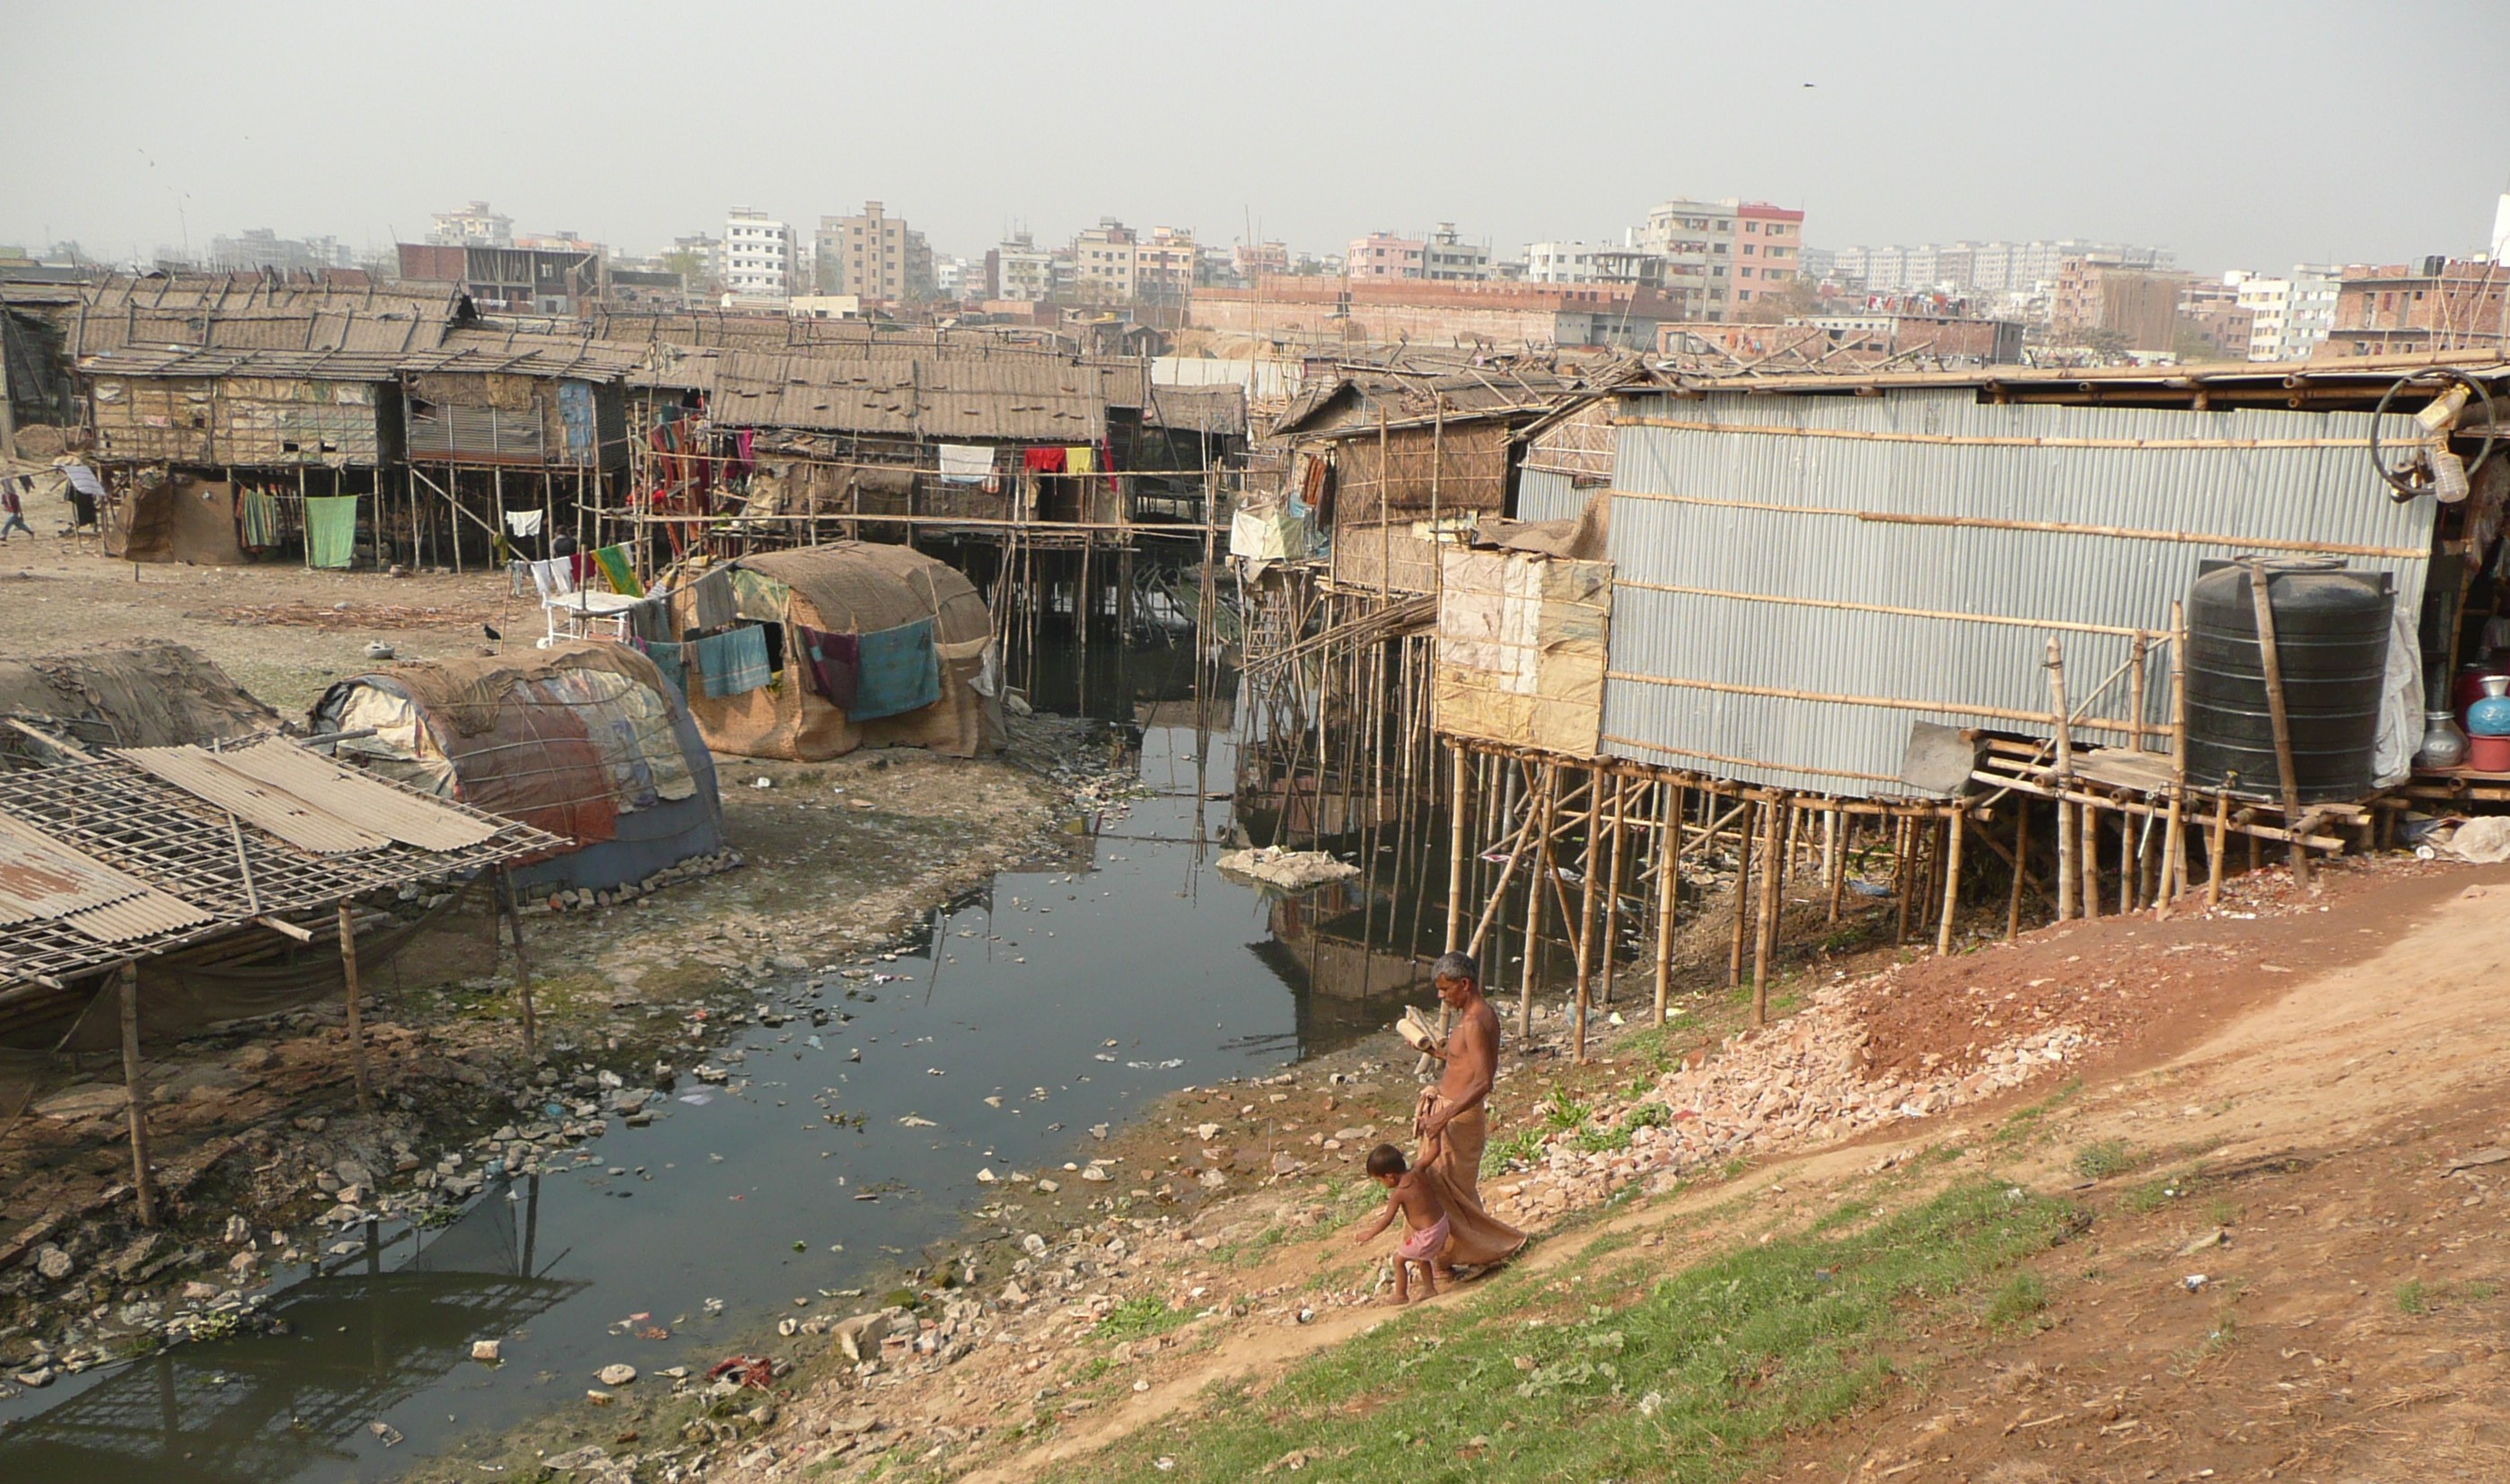 Slum settlement in Dhaka, Bangladesh (photo: Dominik Muller)